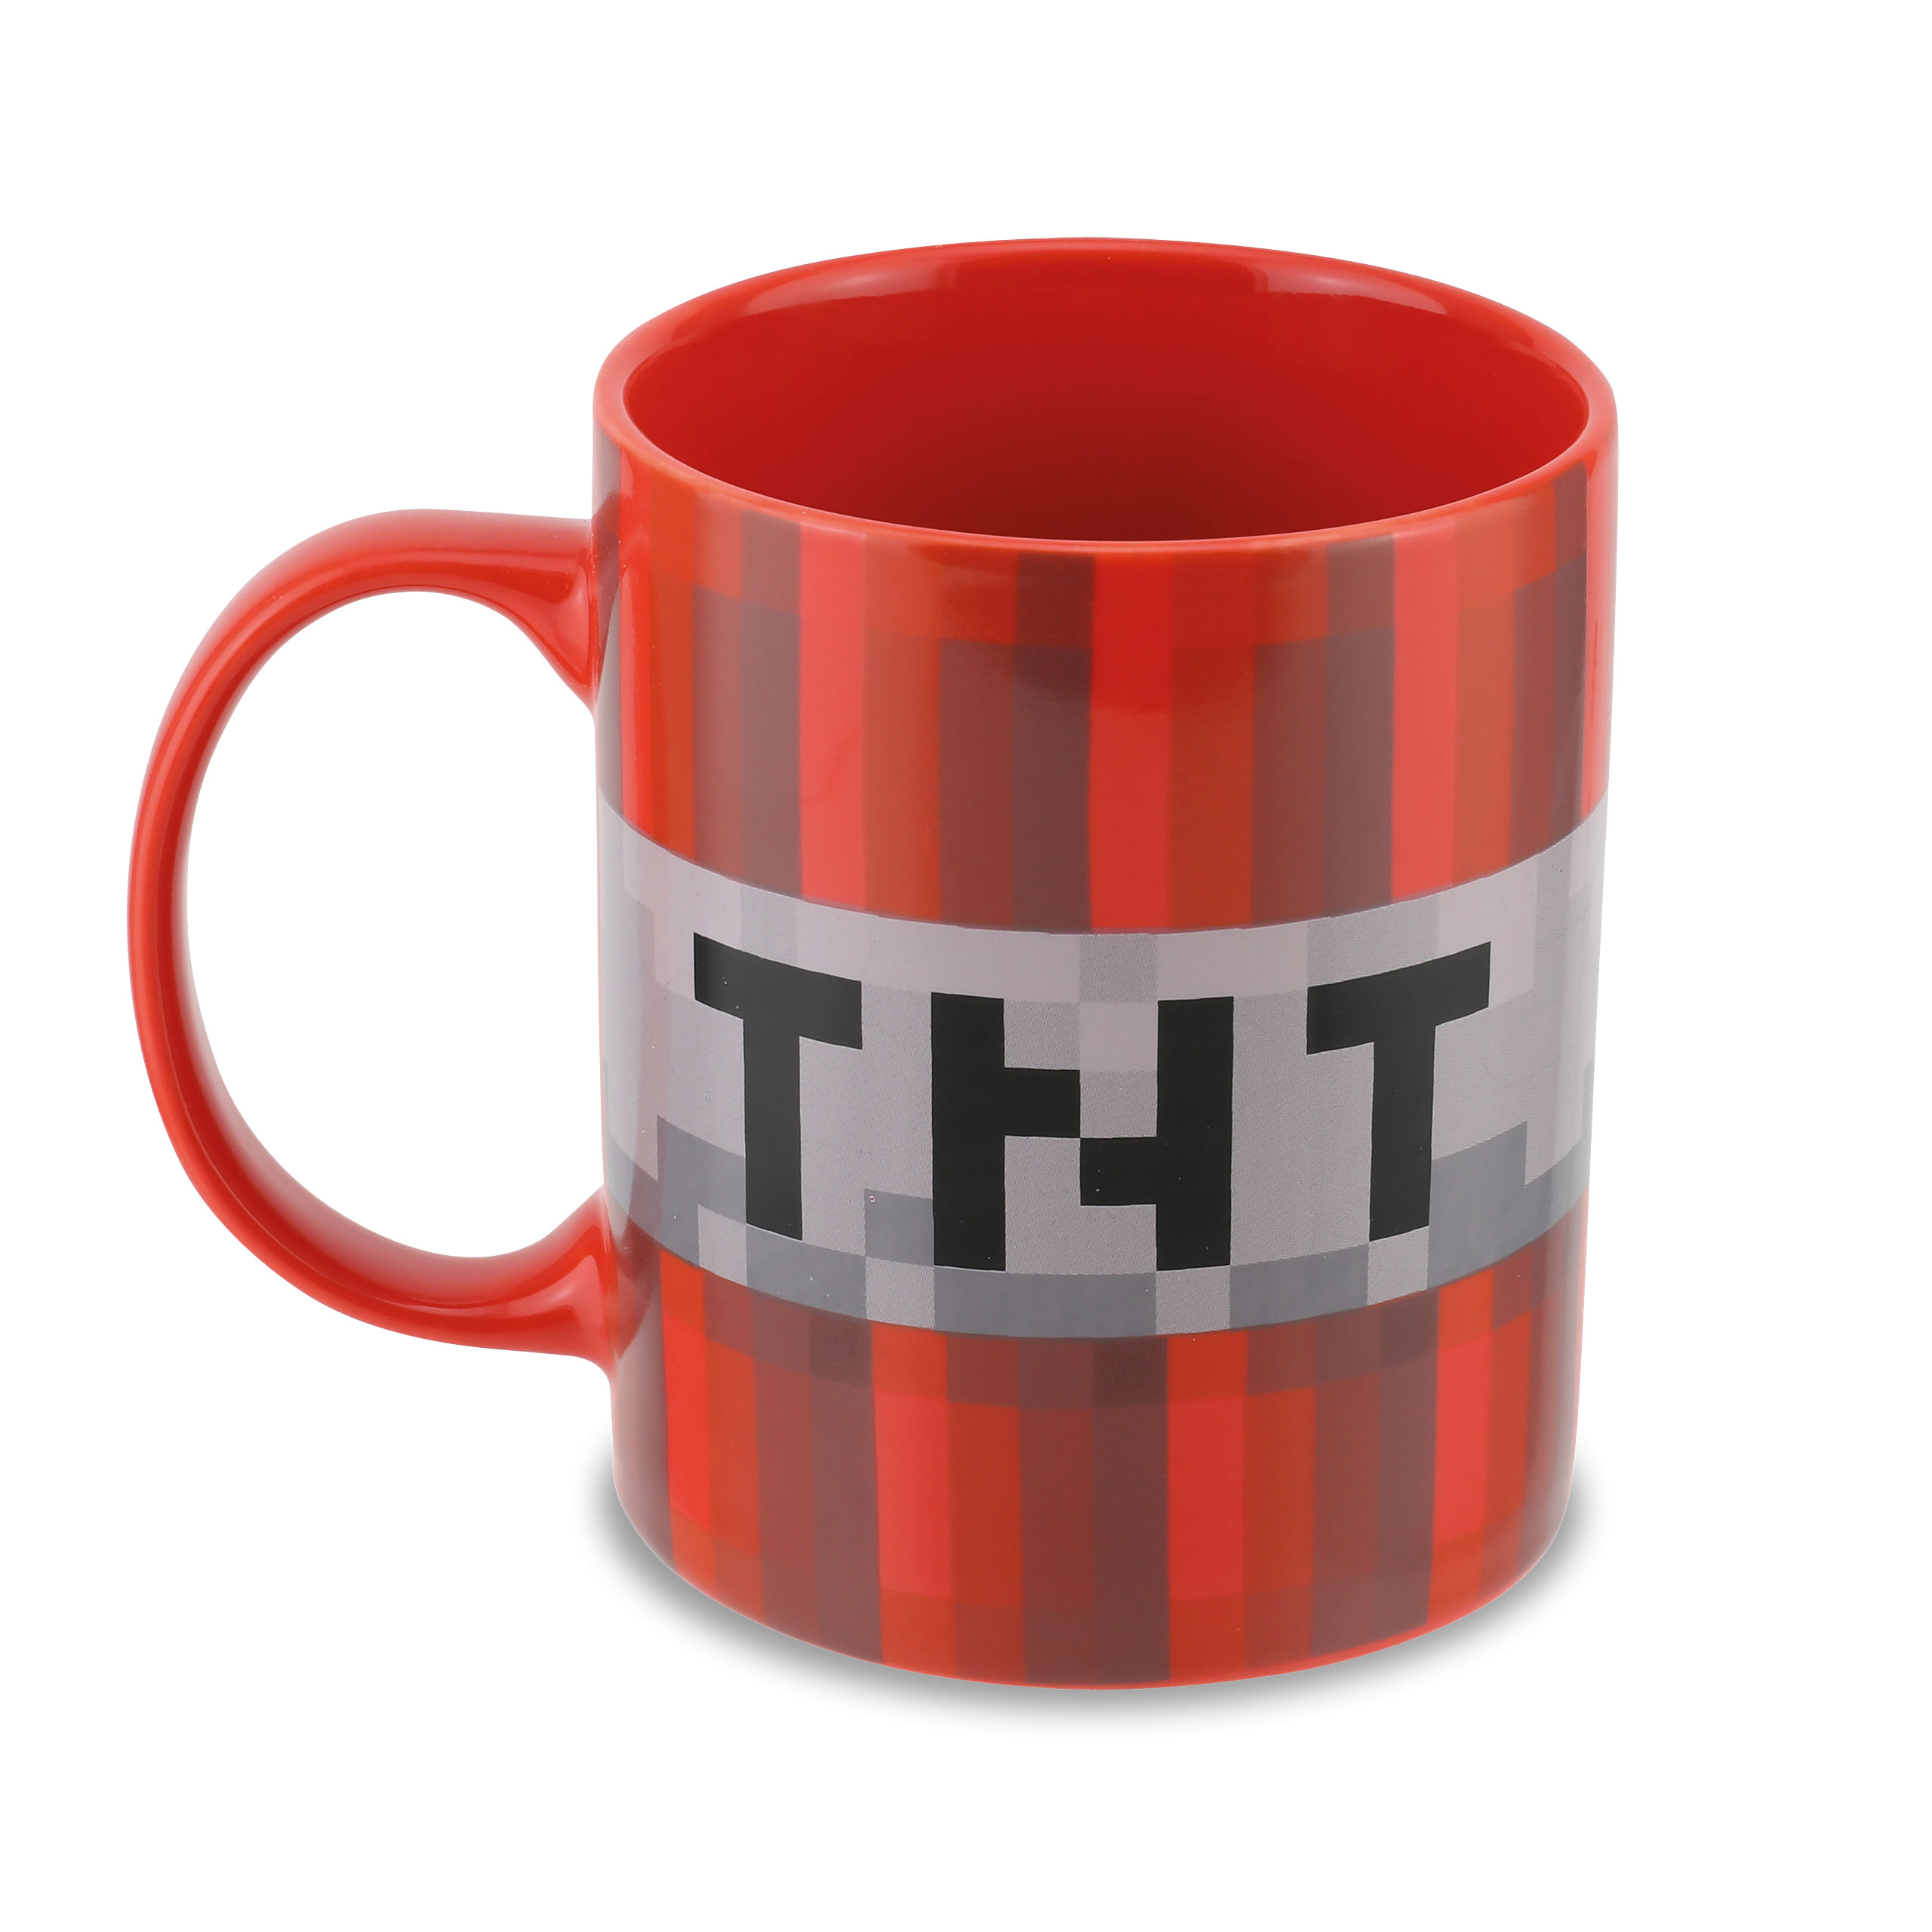 Minecraft - Creeper Socks and TNT Mug Set